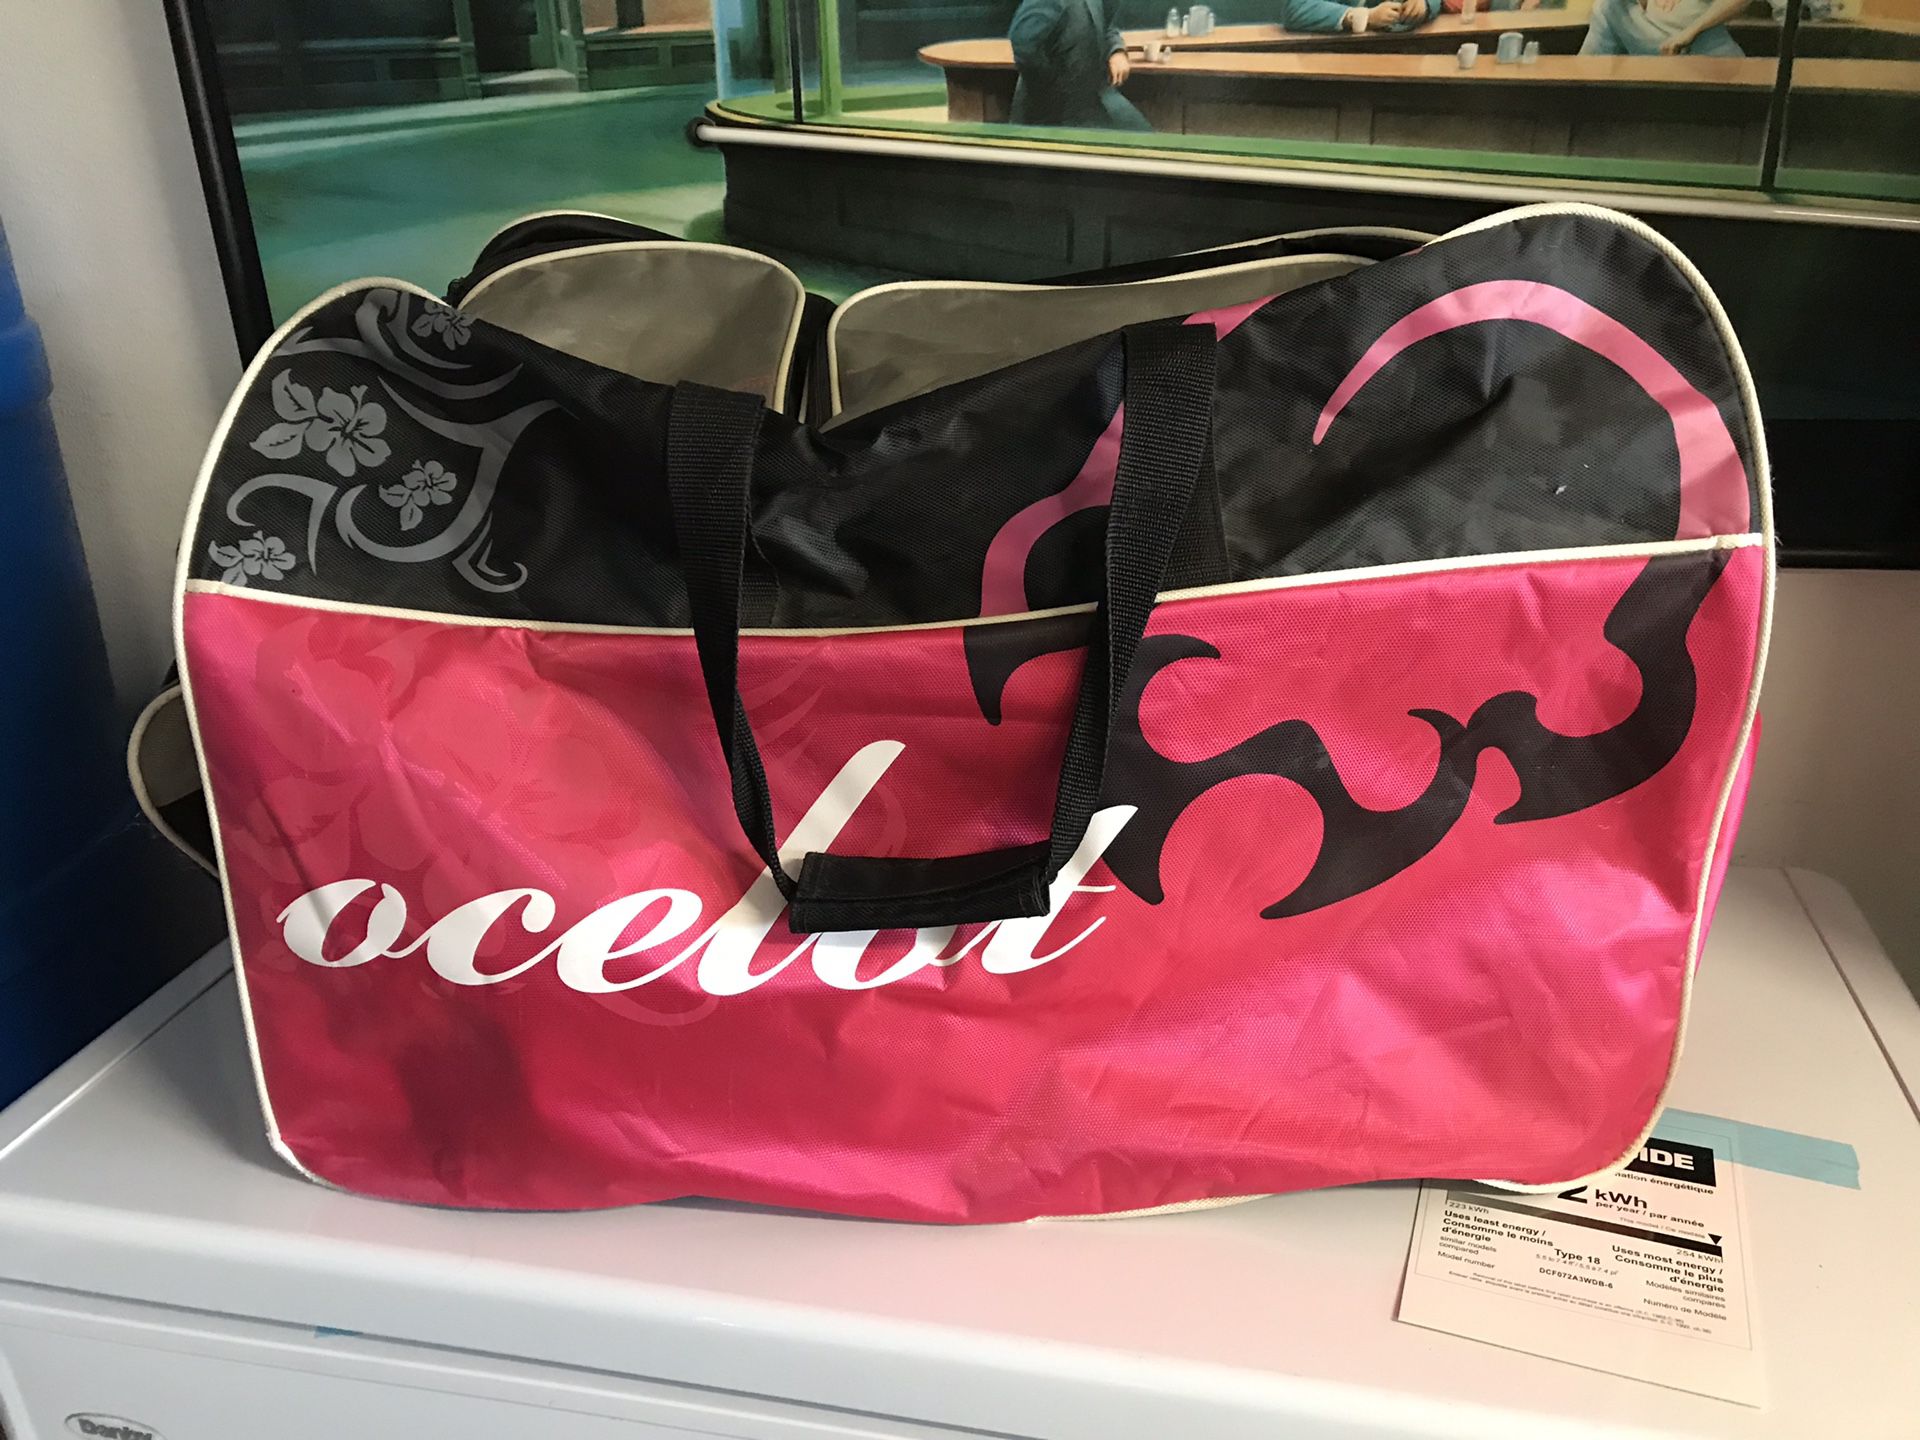 Ocelot riding bag